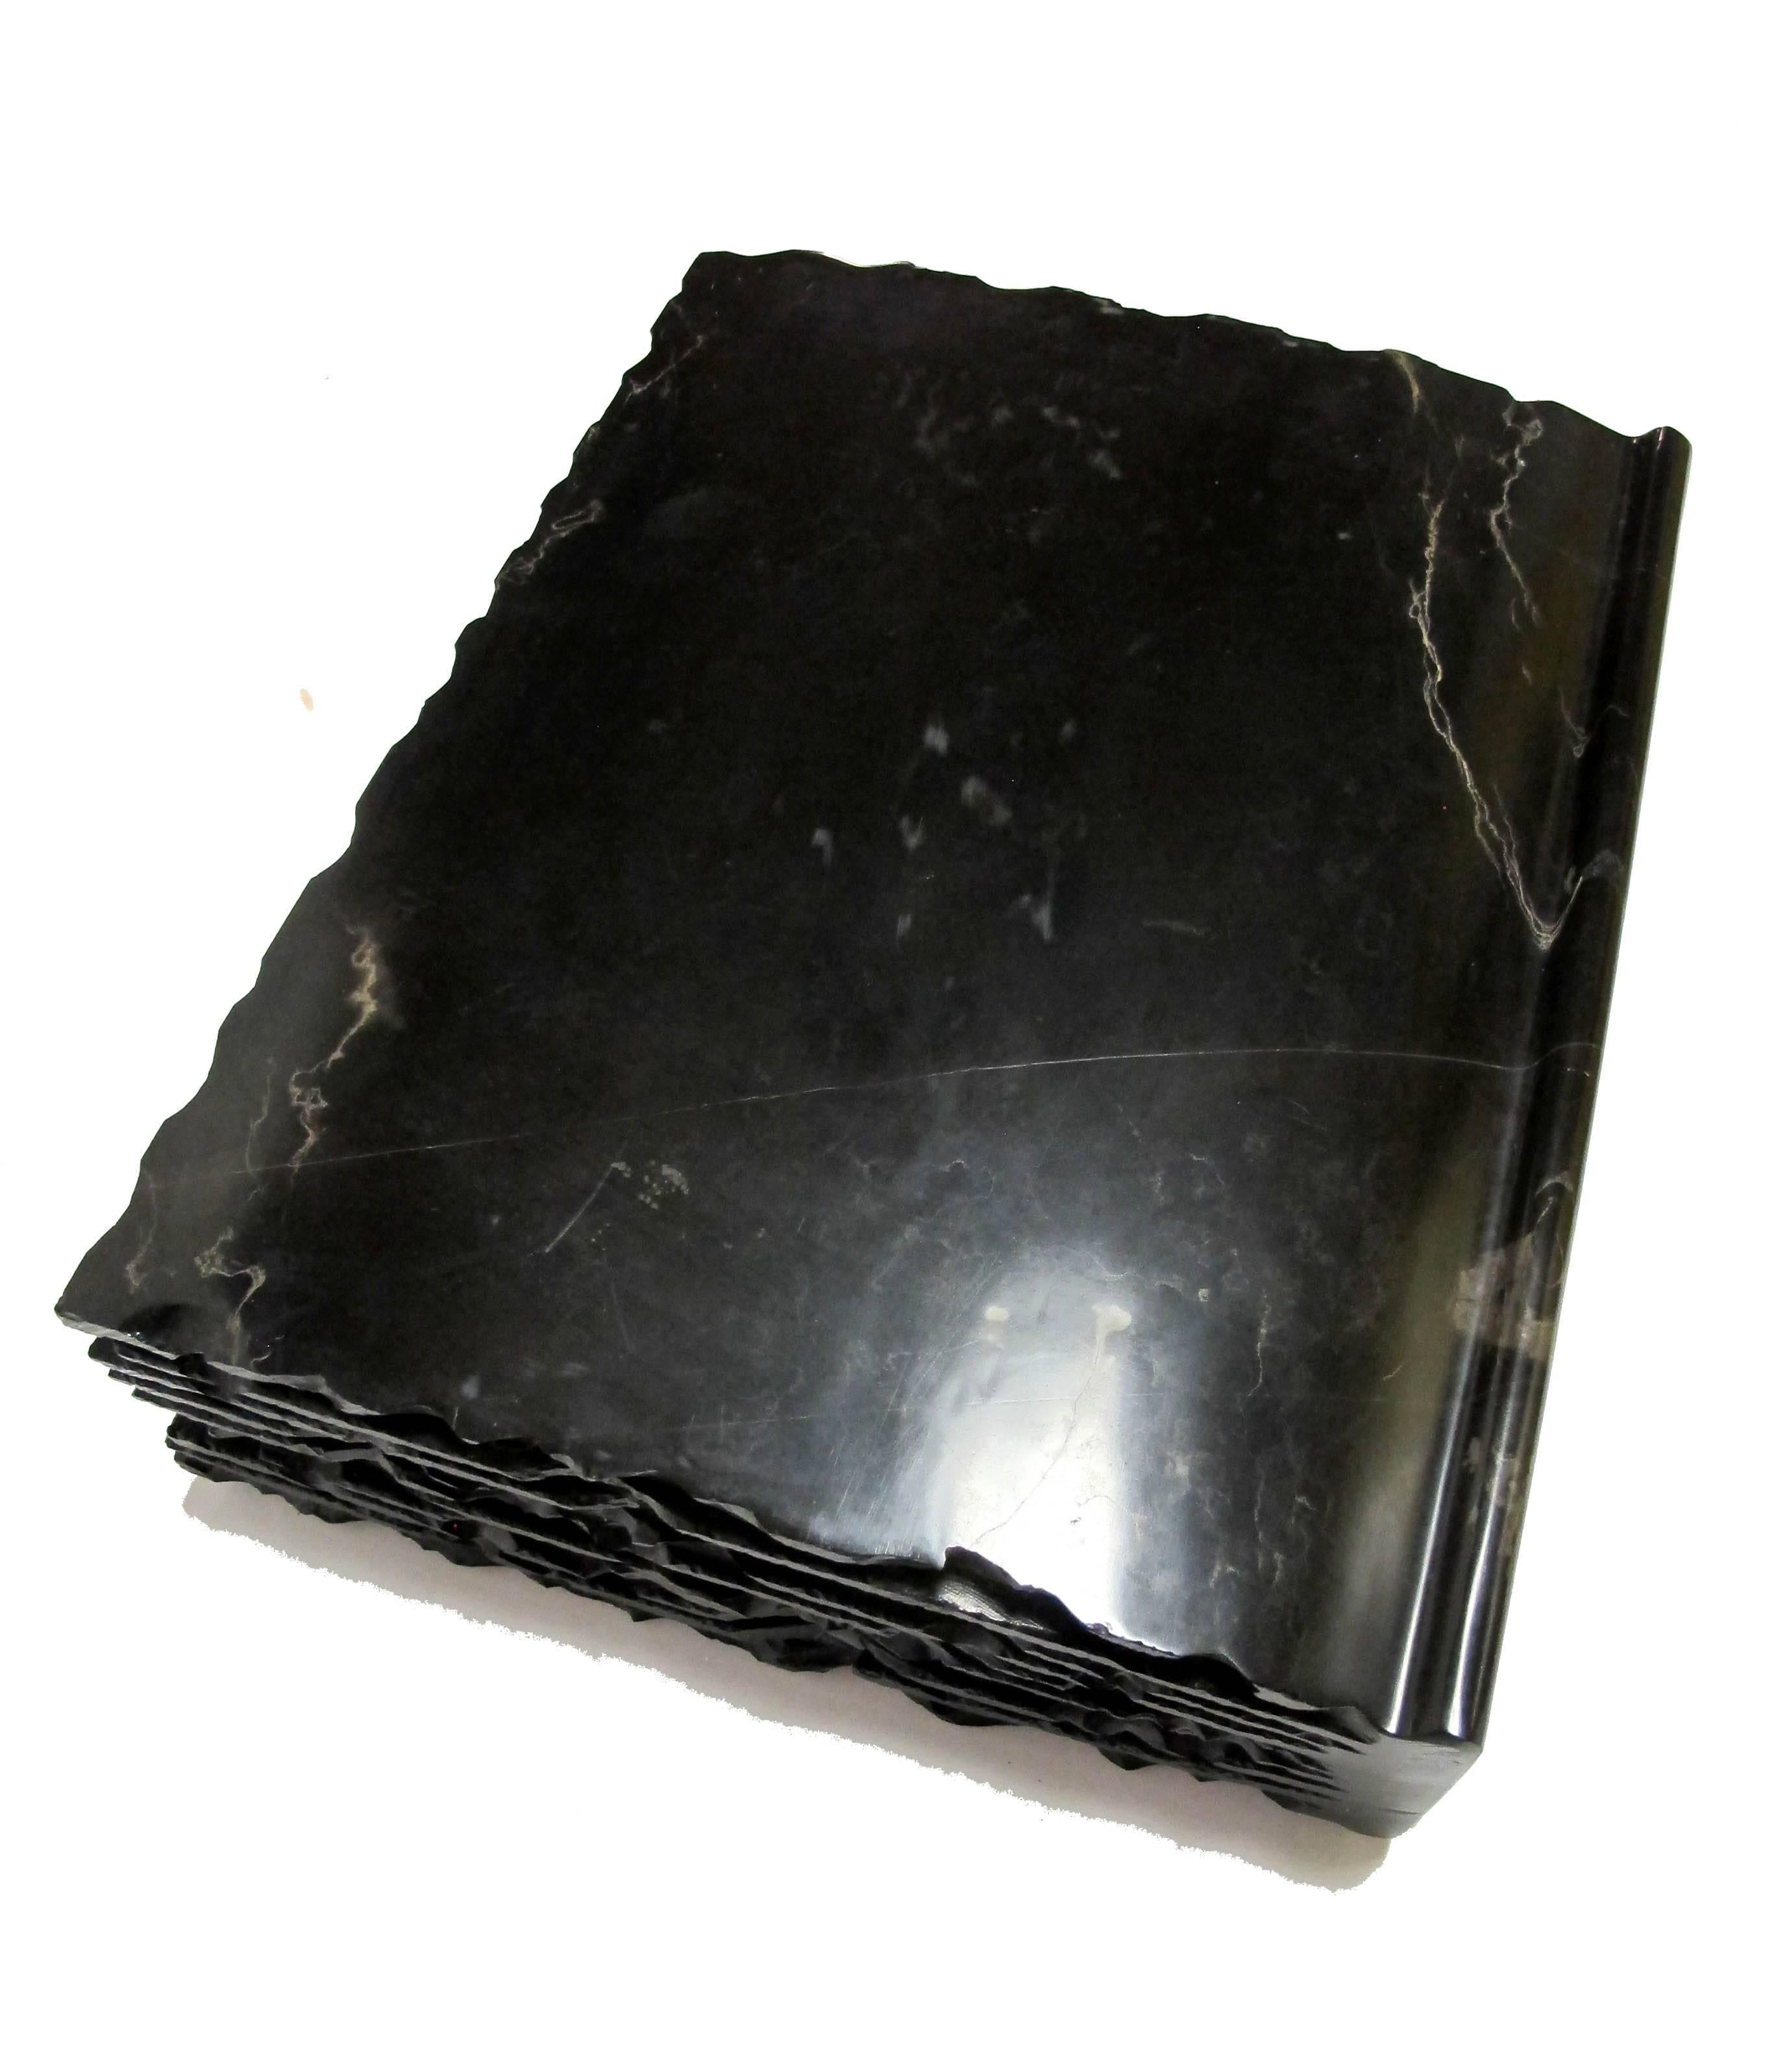 The Black Book by KARTEL - unique handcarved marble, large book sculpture 1